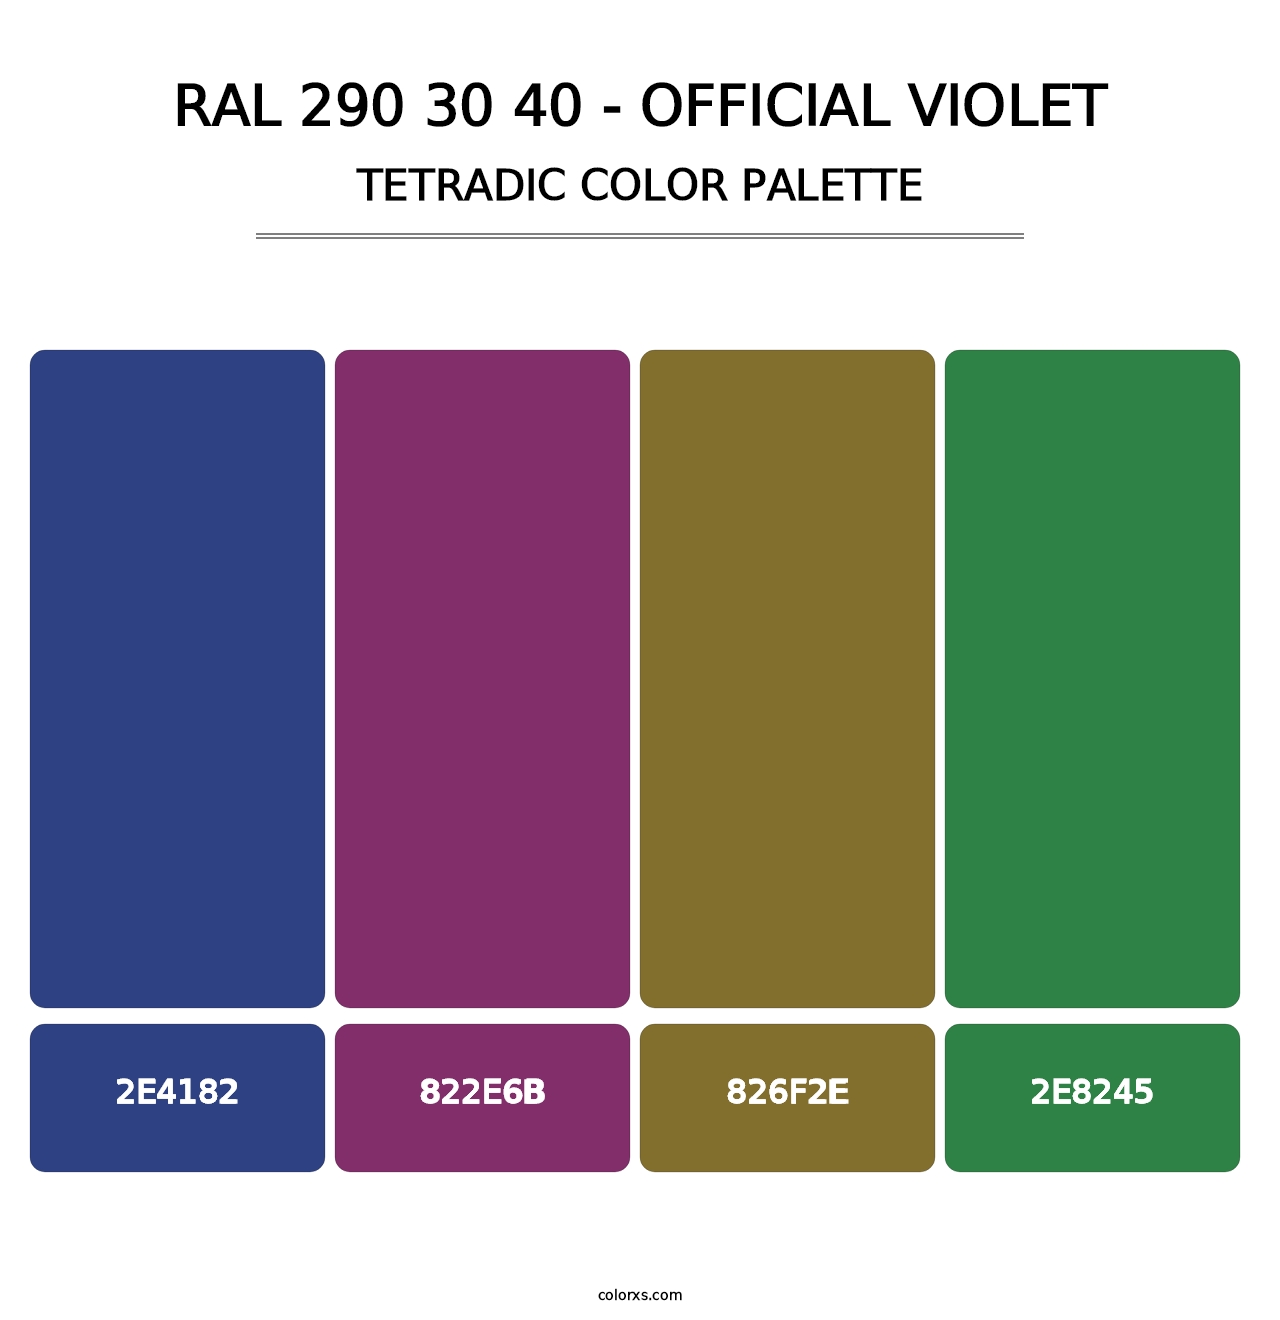 RAL 290 30 40 - Official Violet - Tetradic Color Palette